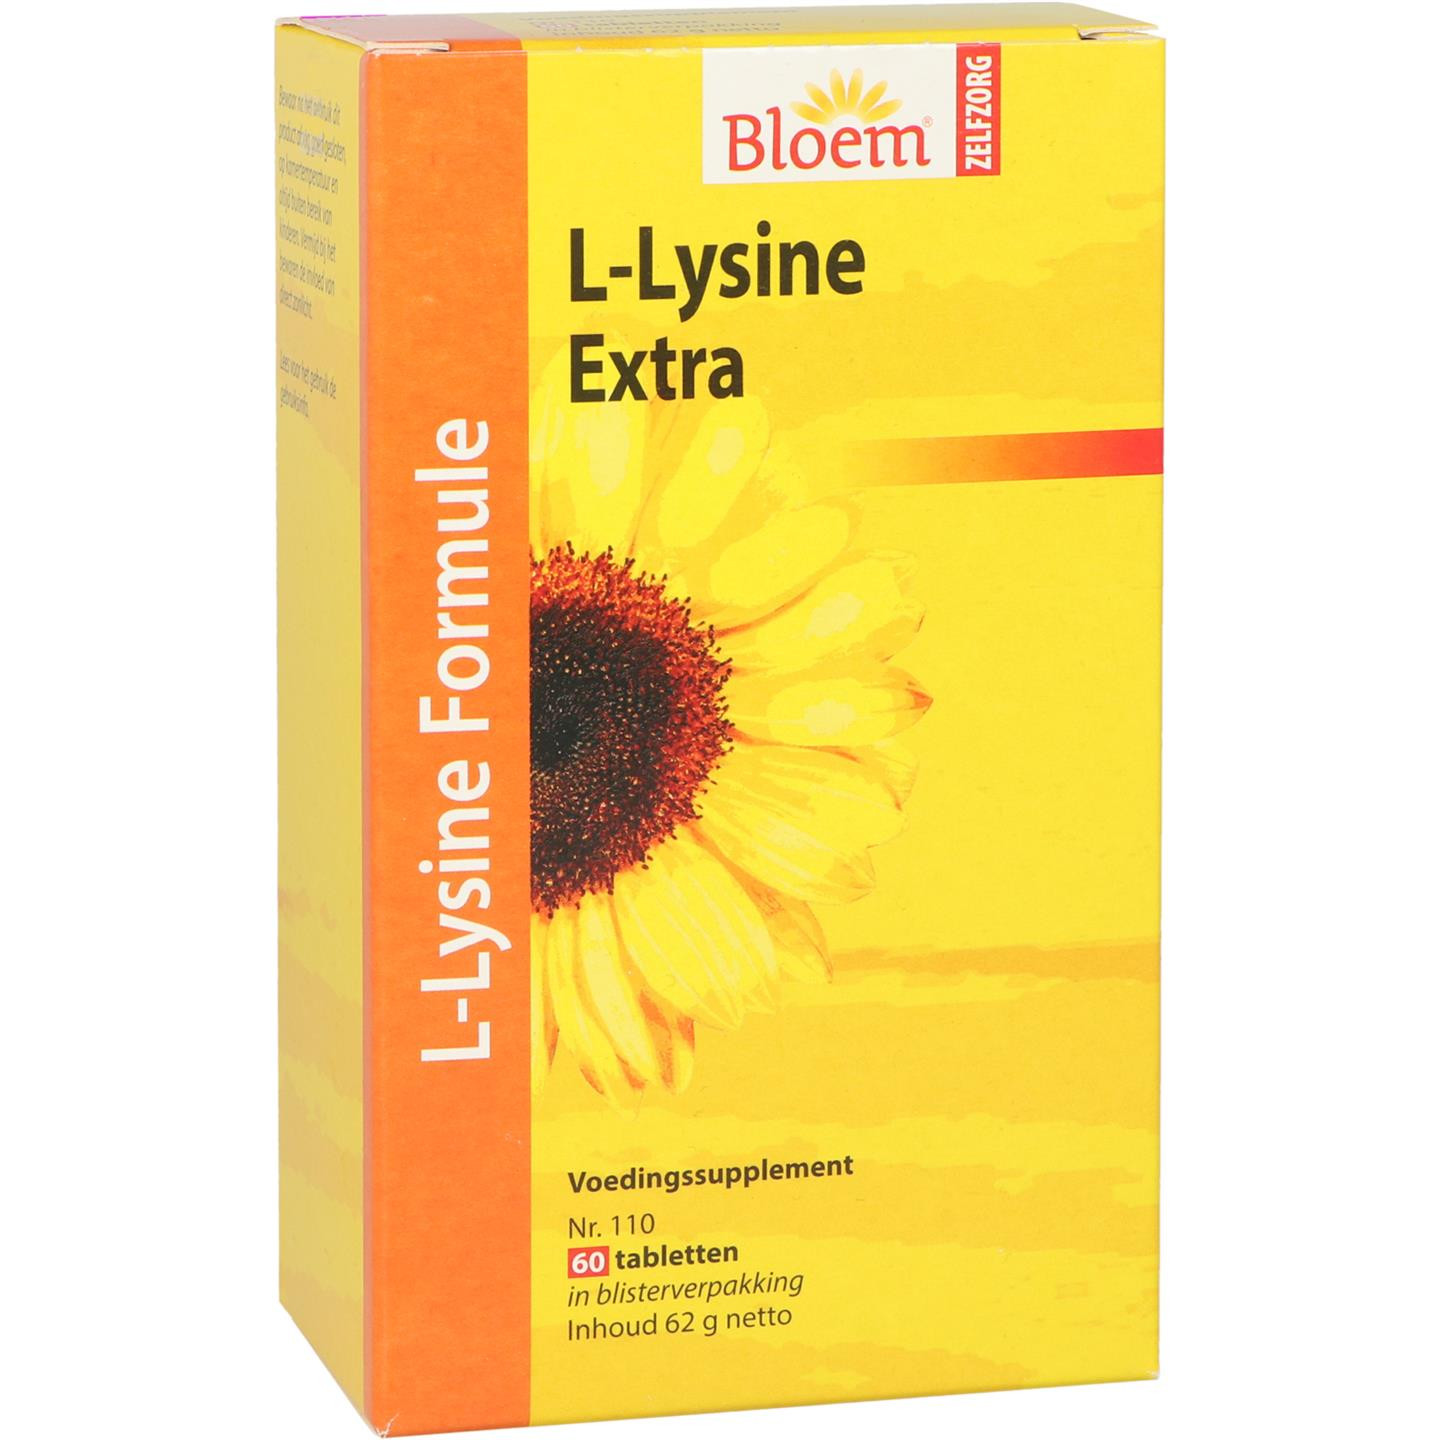 L-Lysine Extra